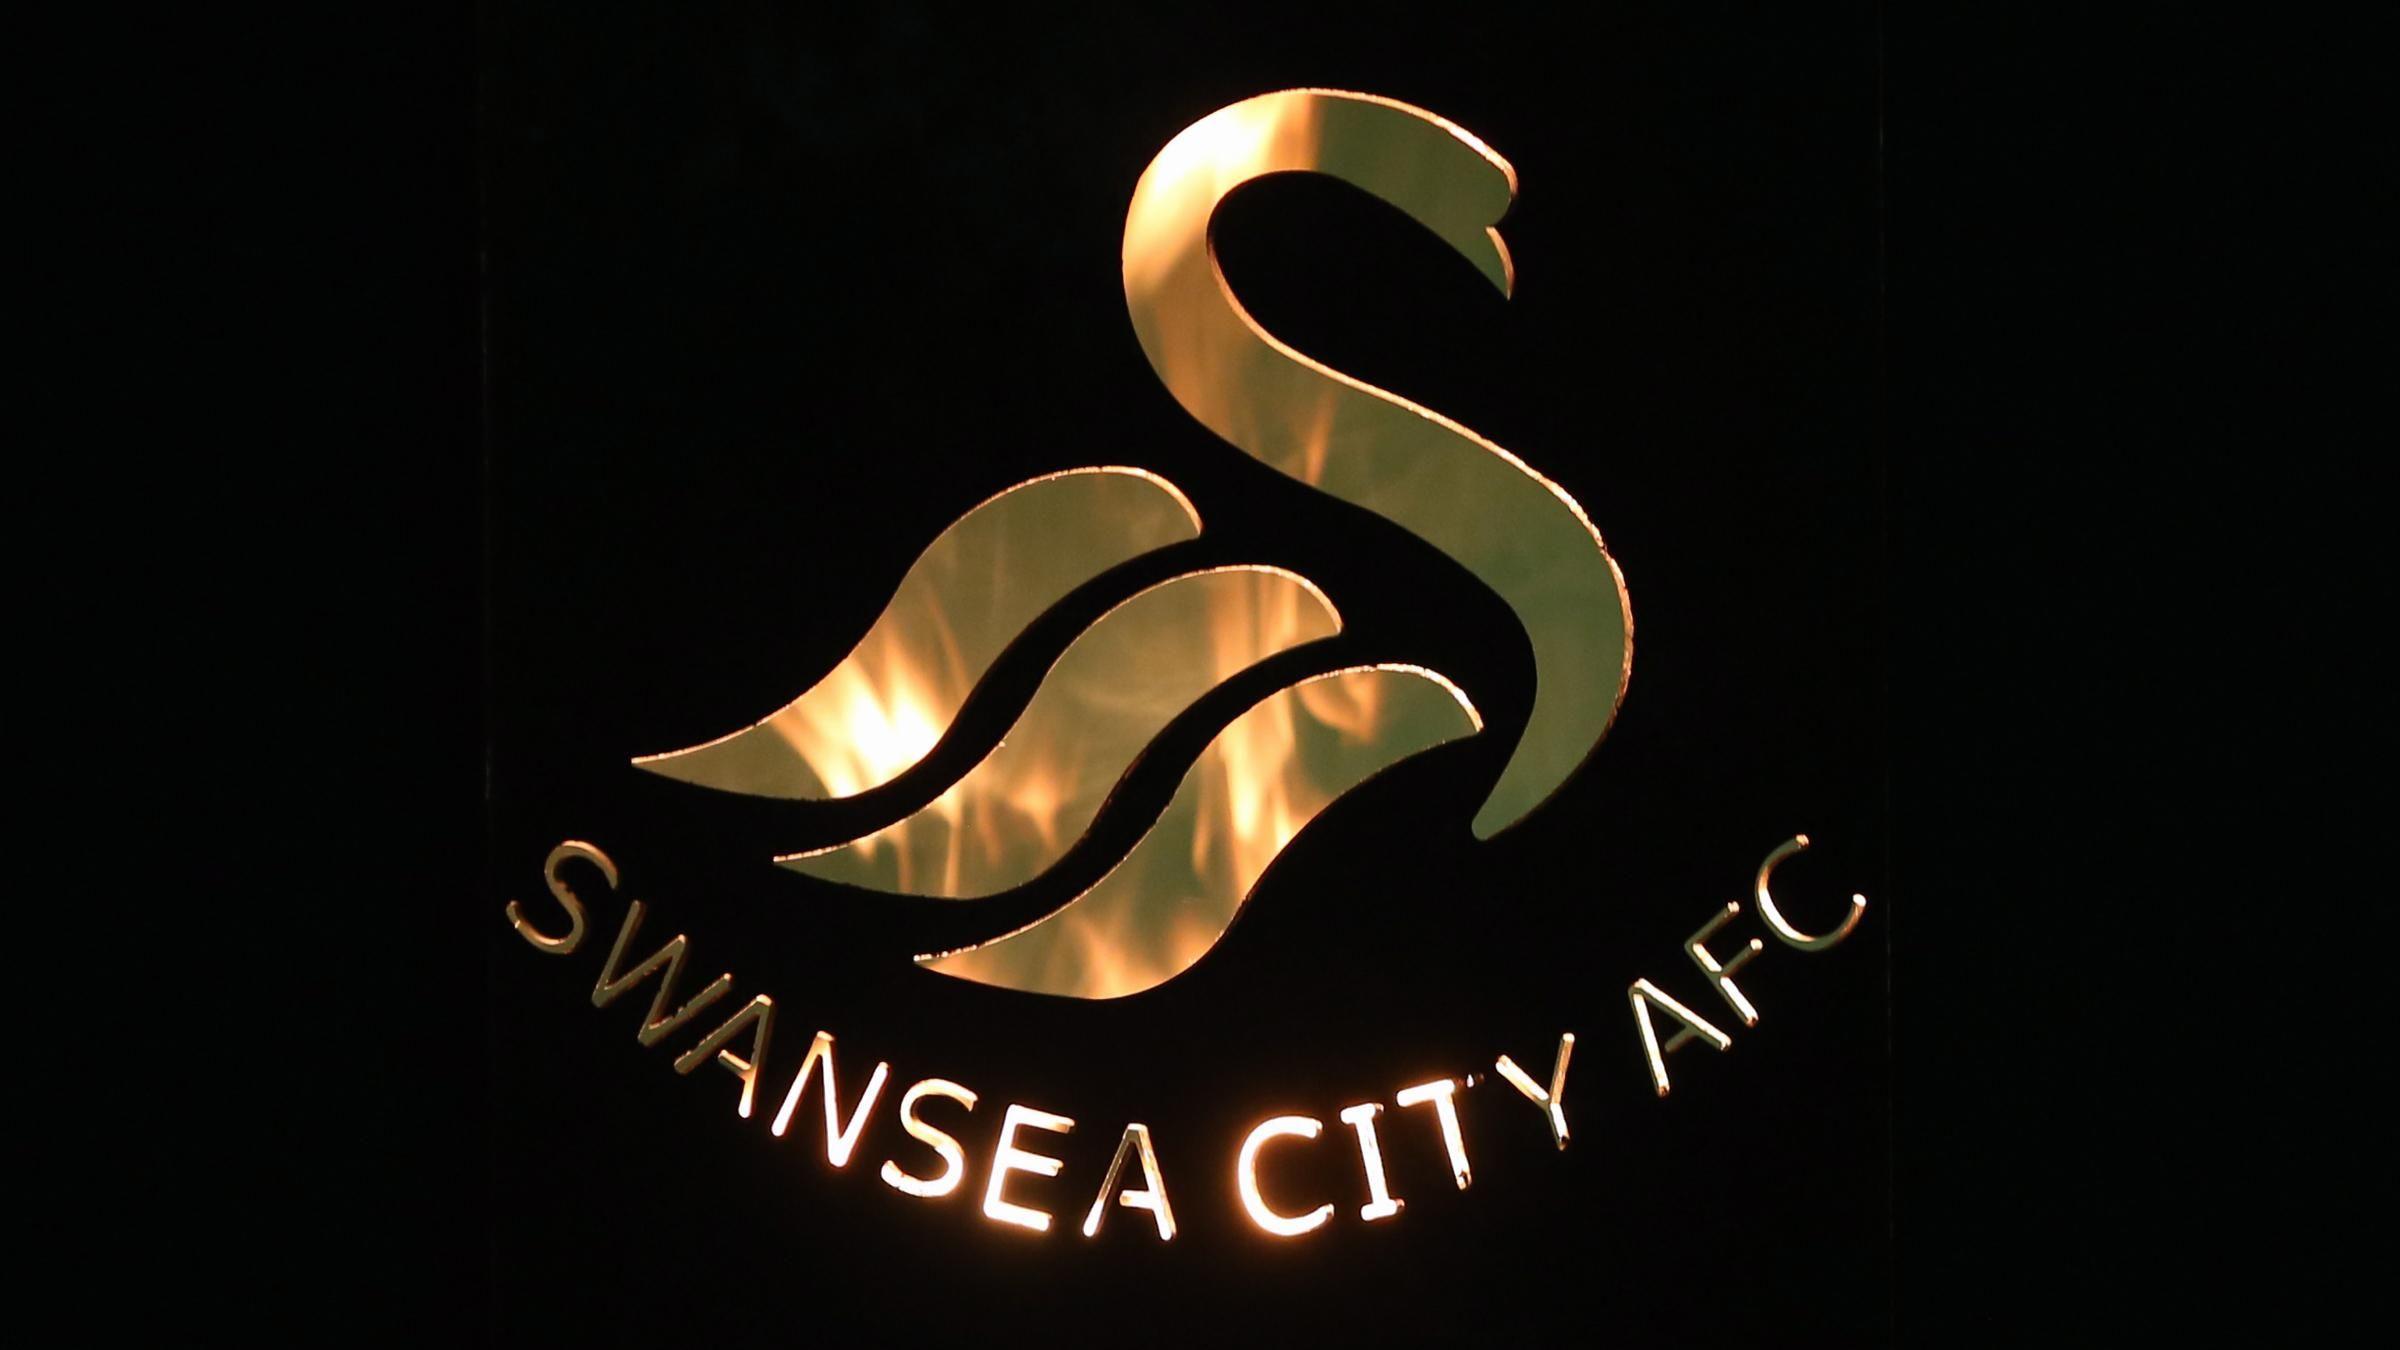 Swansea City Logo - Swans confirm latest accounts | Swansea City FC